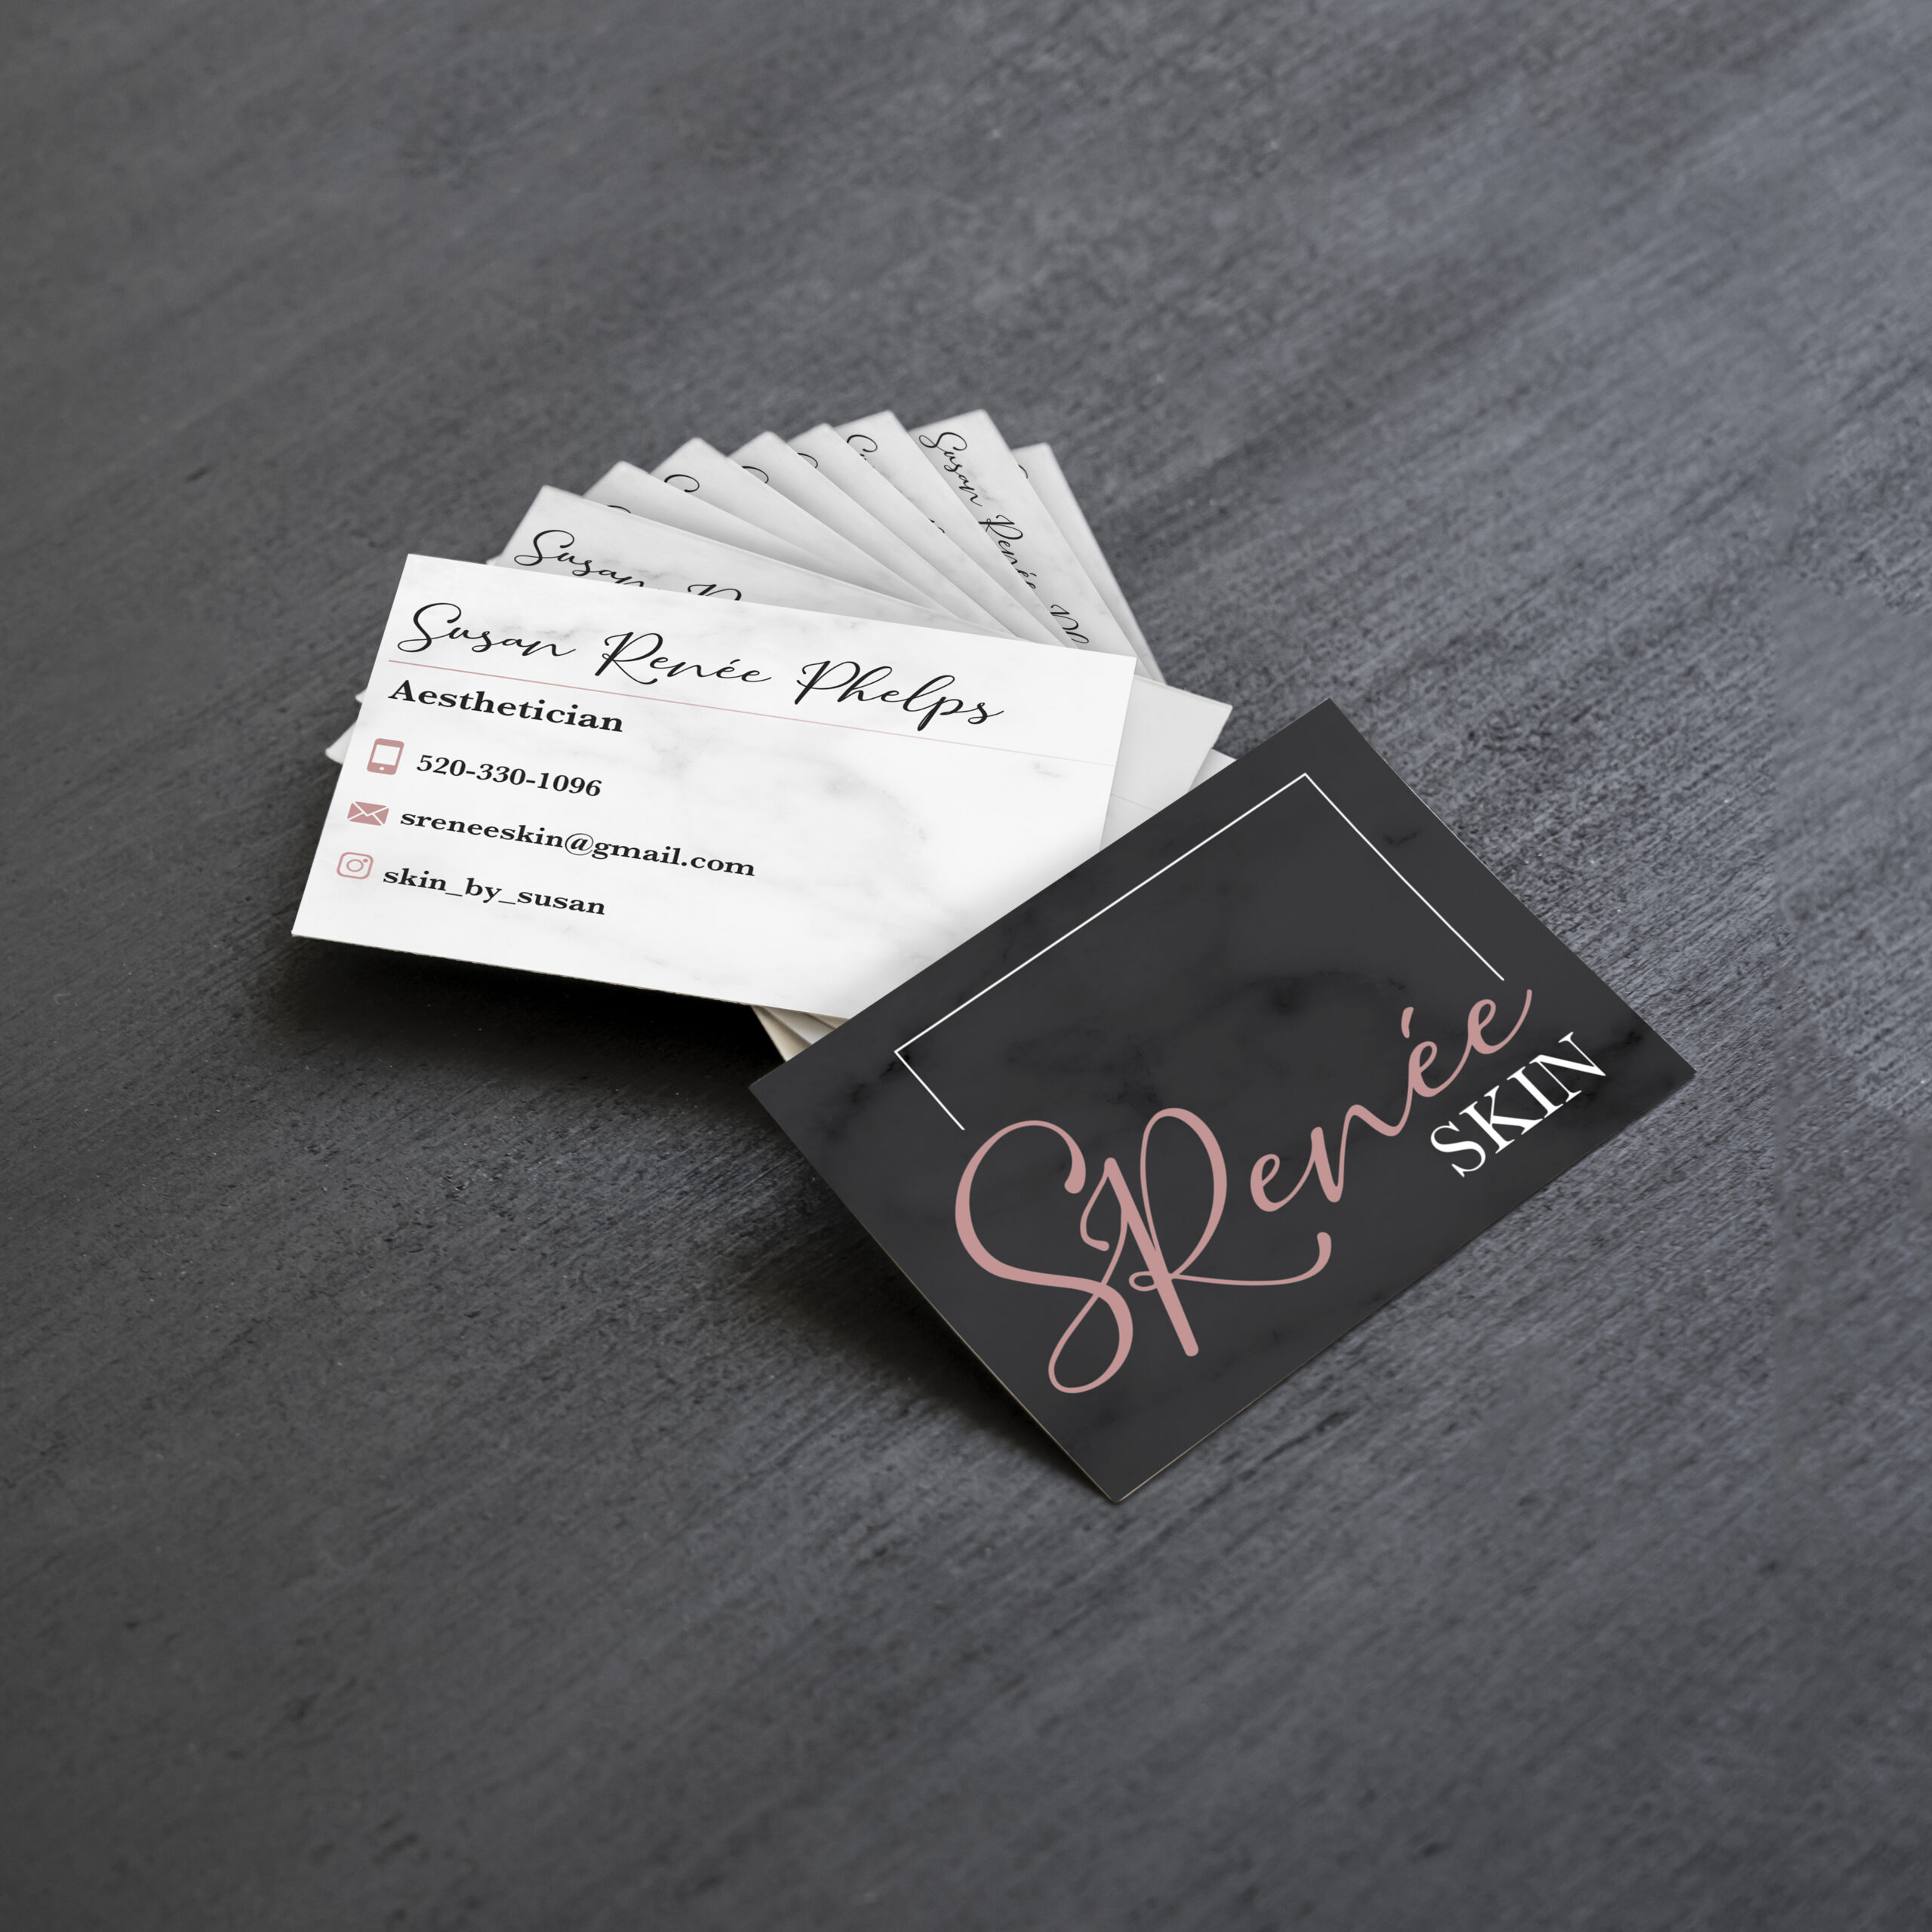 Susan Business Card Design - Brand and Web Design Agency